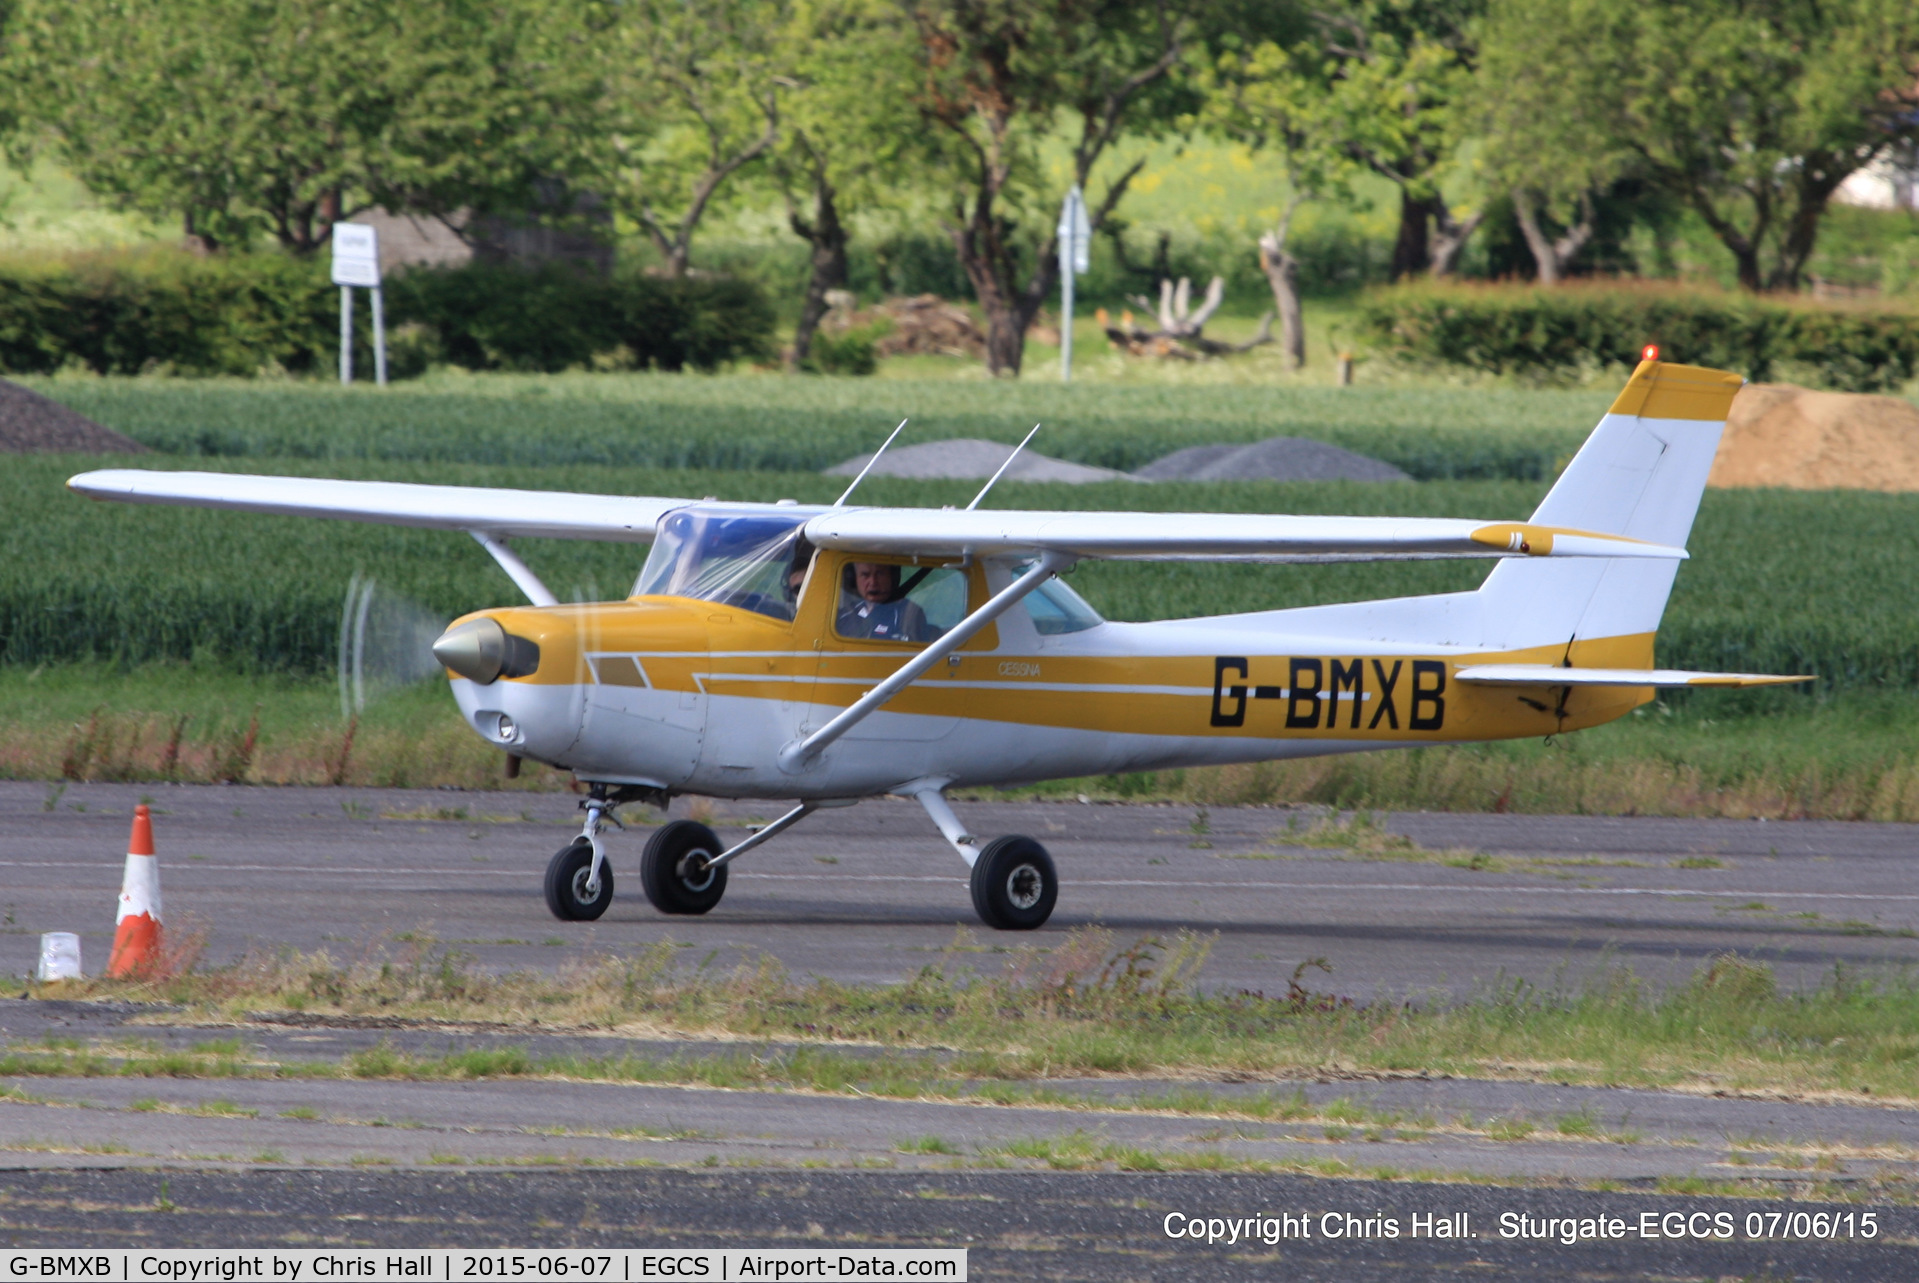 G-BMXB, 1977 Cessna 152 C/N 152-80996, at the Sturgate Summer flyin